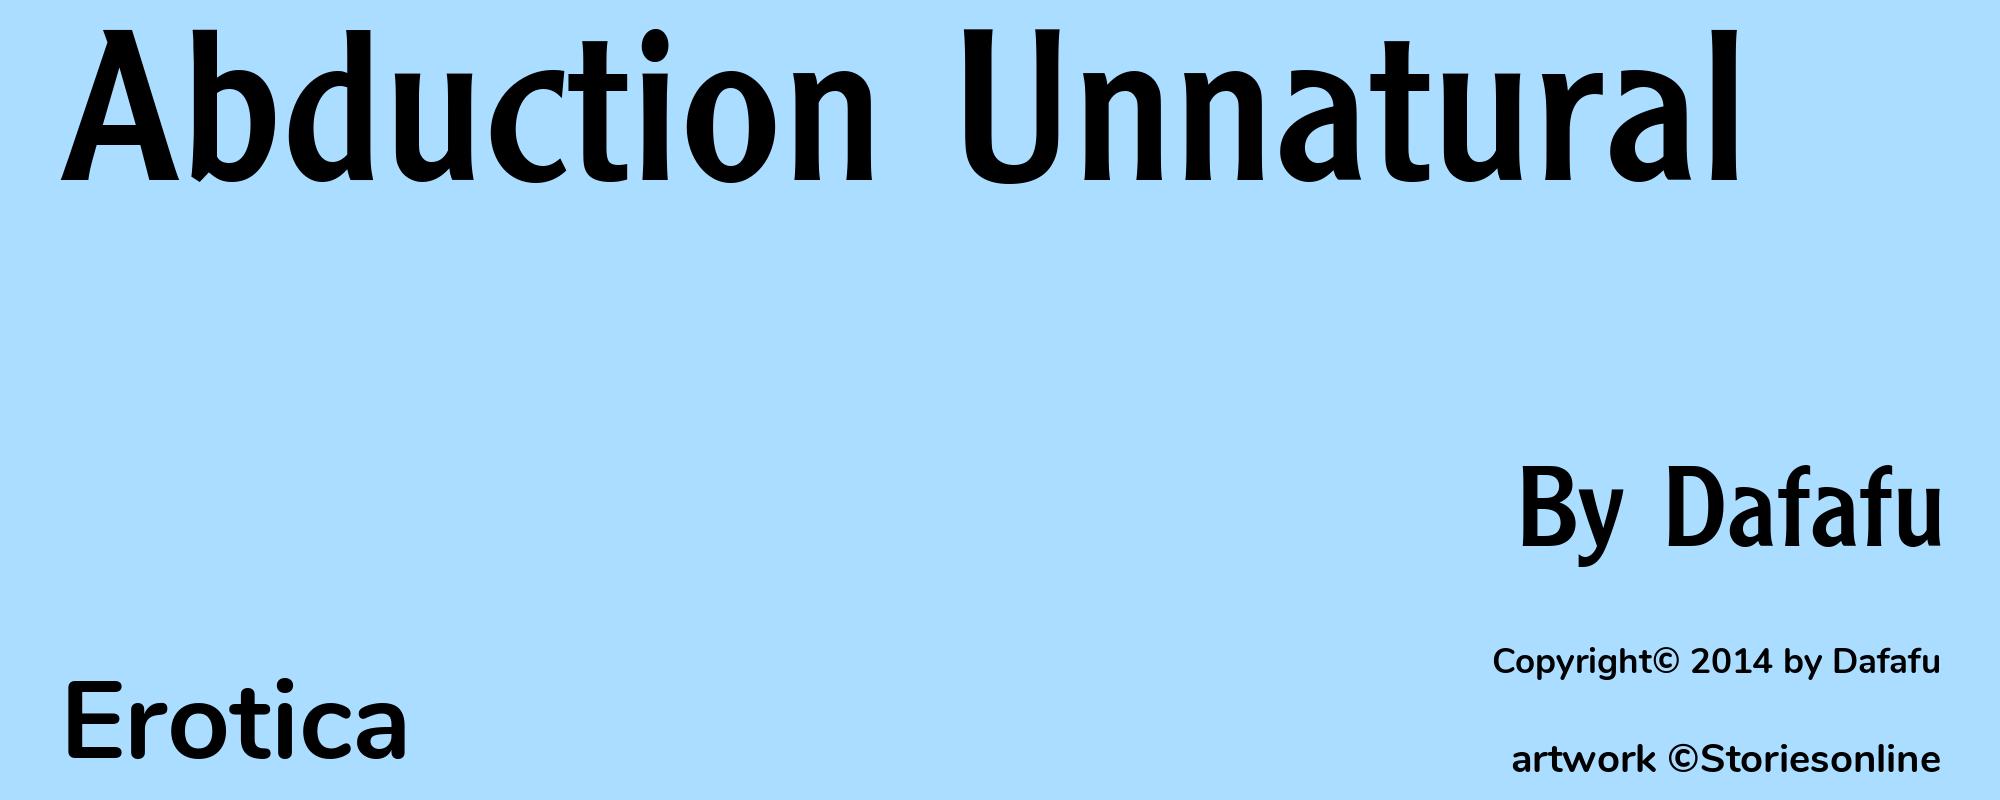 Abduction Unnatural - Cover